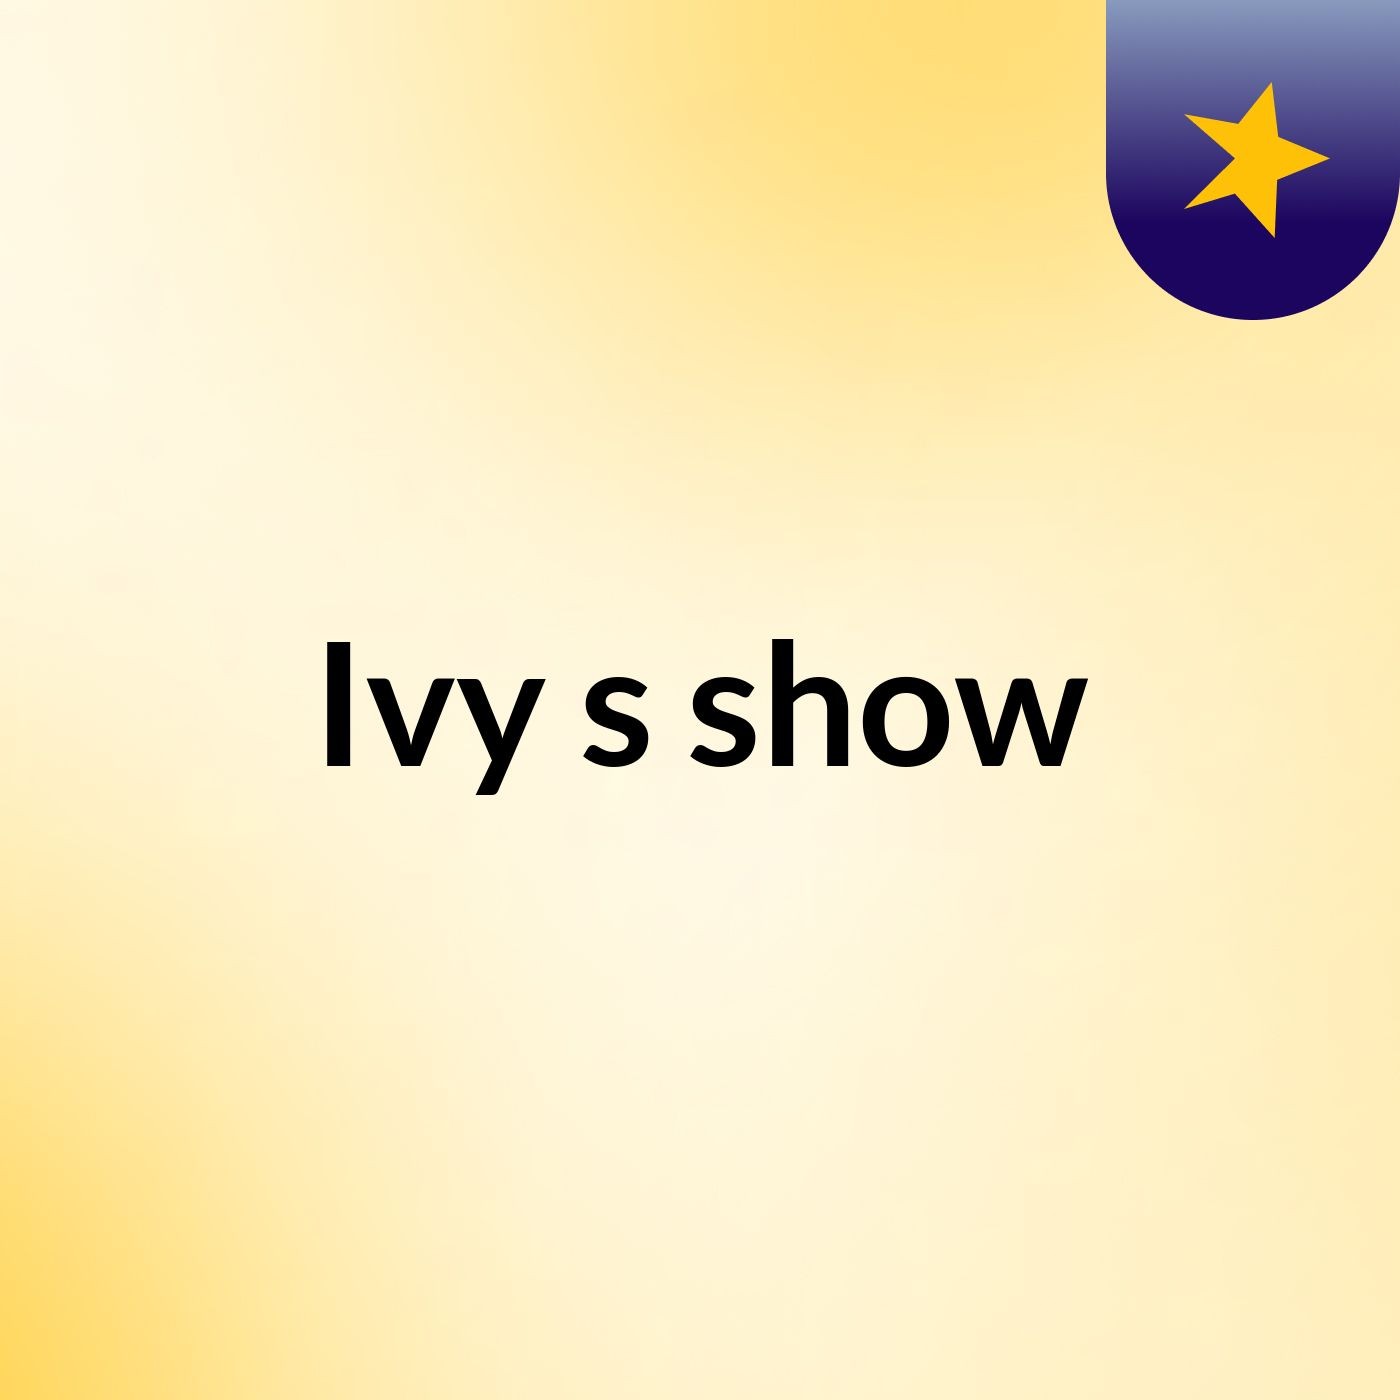 Ivy's show